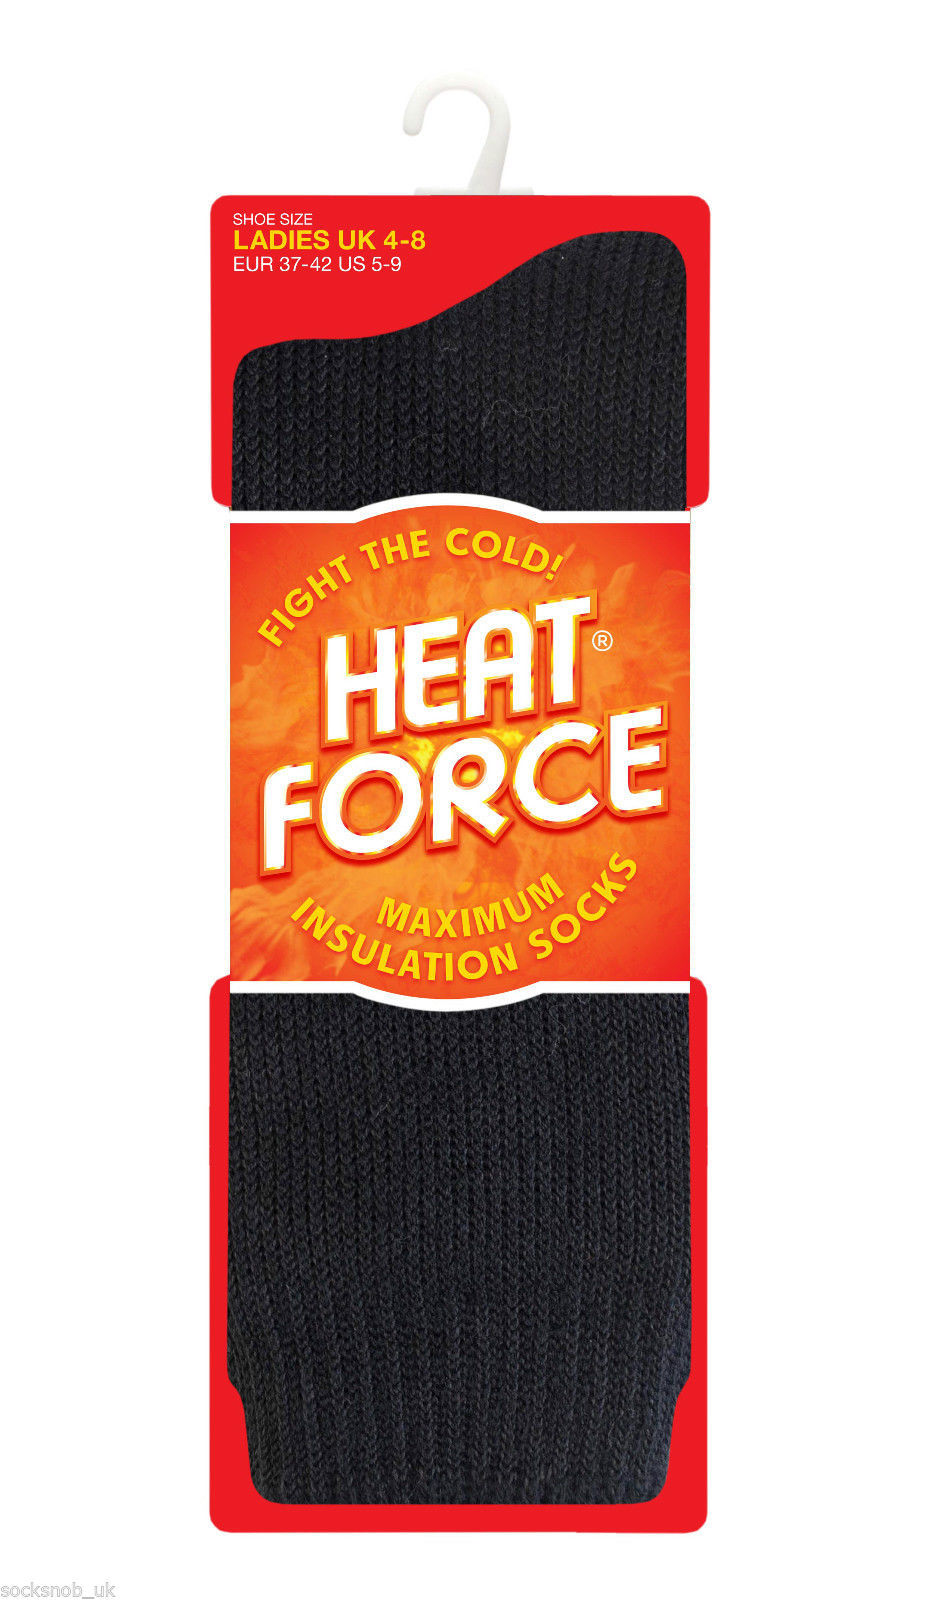 Heat Force - Multi Pack Thick Winter Warm Thermal Socks,4-8 uk, 37-42 eur